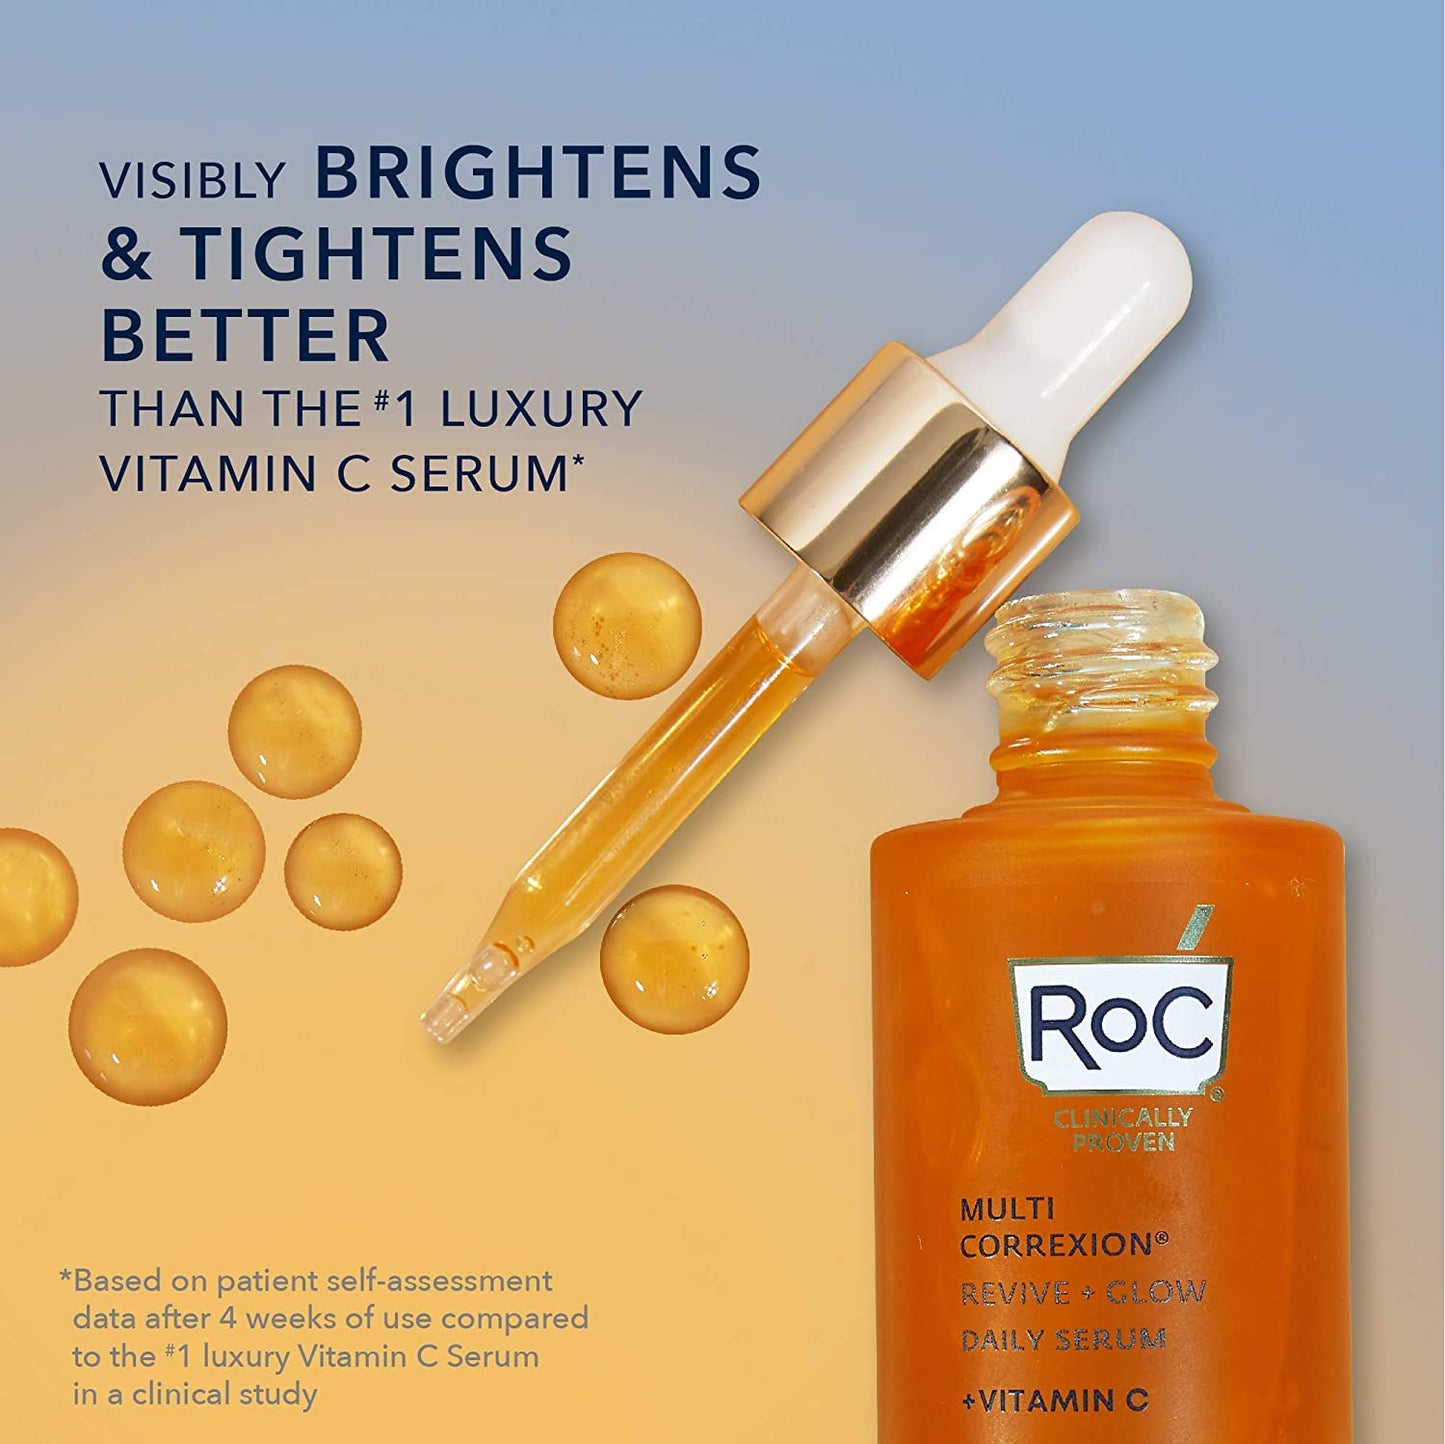 RoC Multi Correxion Revive + Glow Daily Serum with Vitamin C, 1.0 fl.oz / 30ml